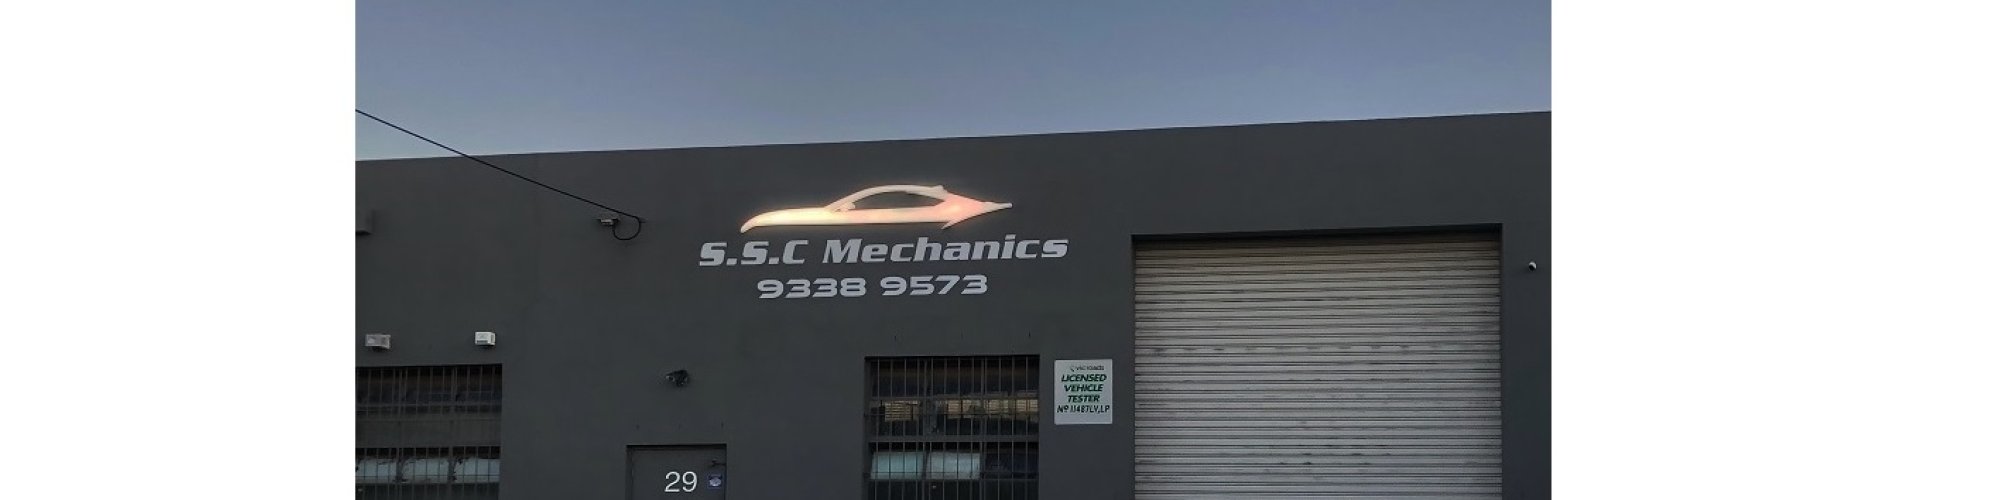 S.S.C Mechanics